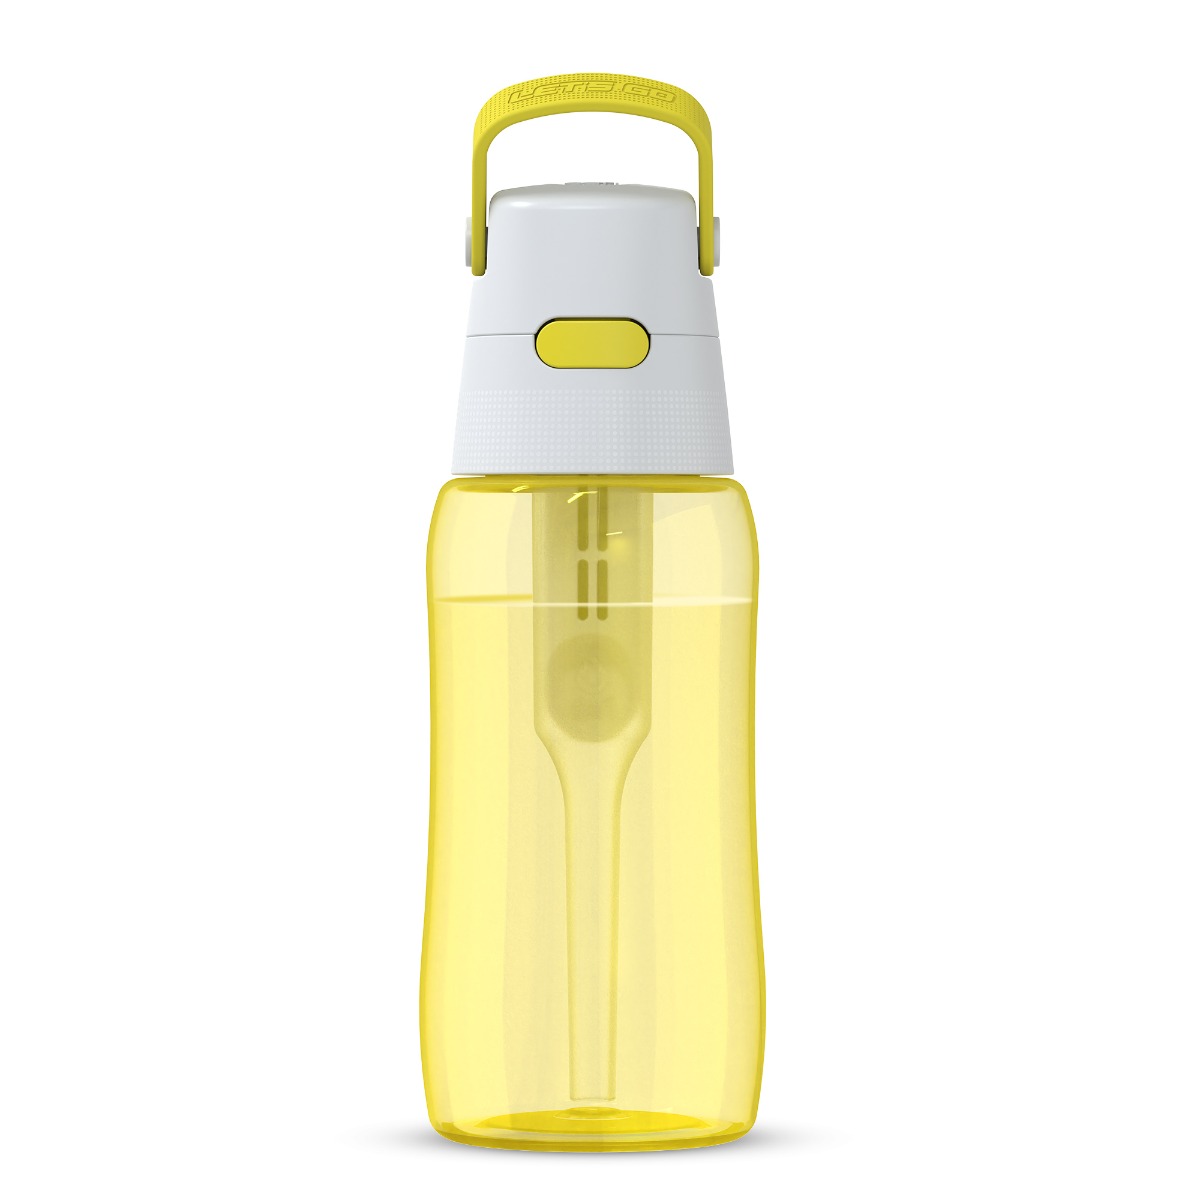 Butelka filtrująca Dafi SOLID 0,5 l cytrynowa barwiony zbiornik z filtrem